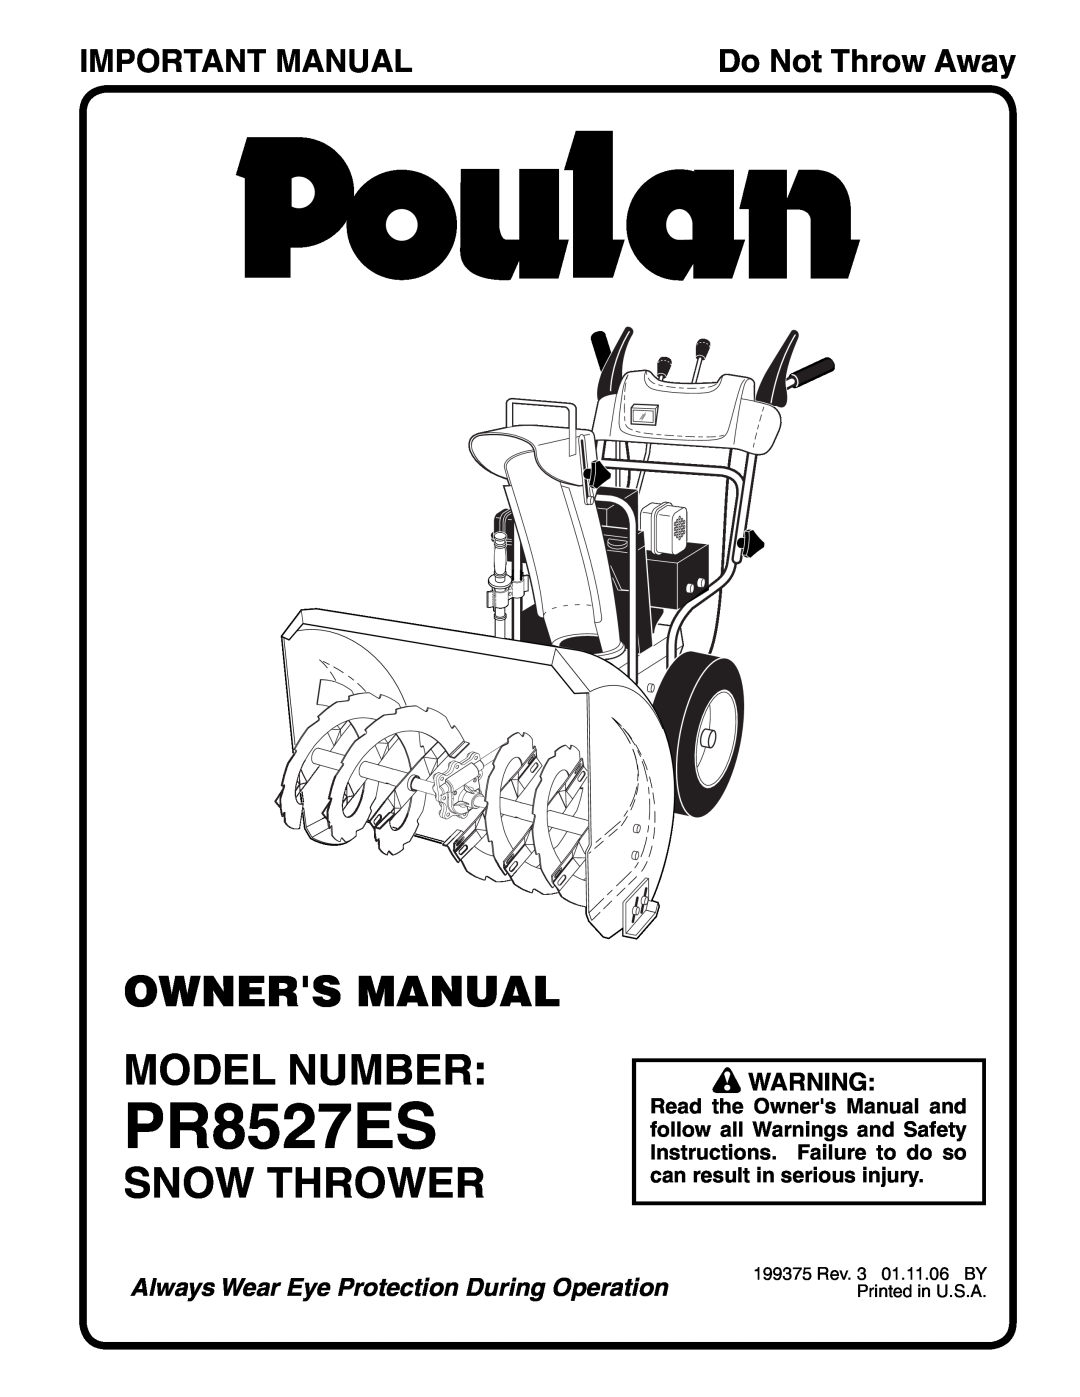 Poulan PR8527ES owner manual Snow Thrower, Important Manual, Do Not Throw Away 